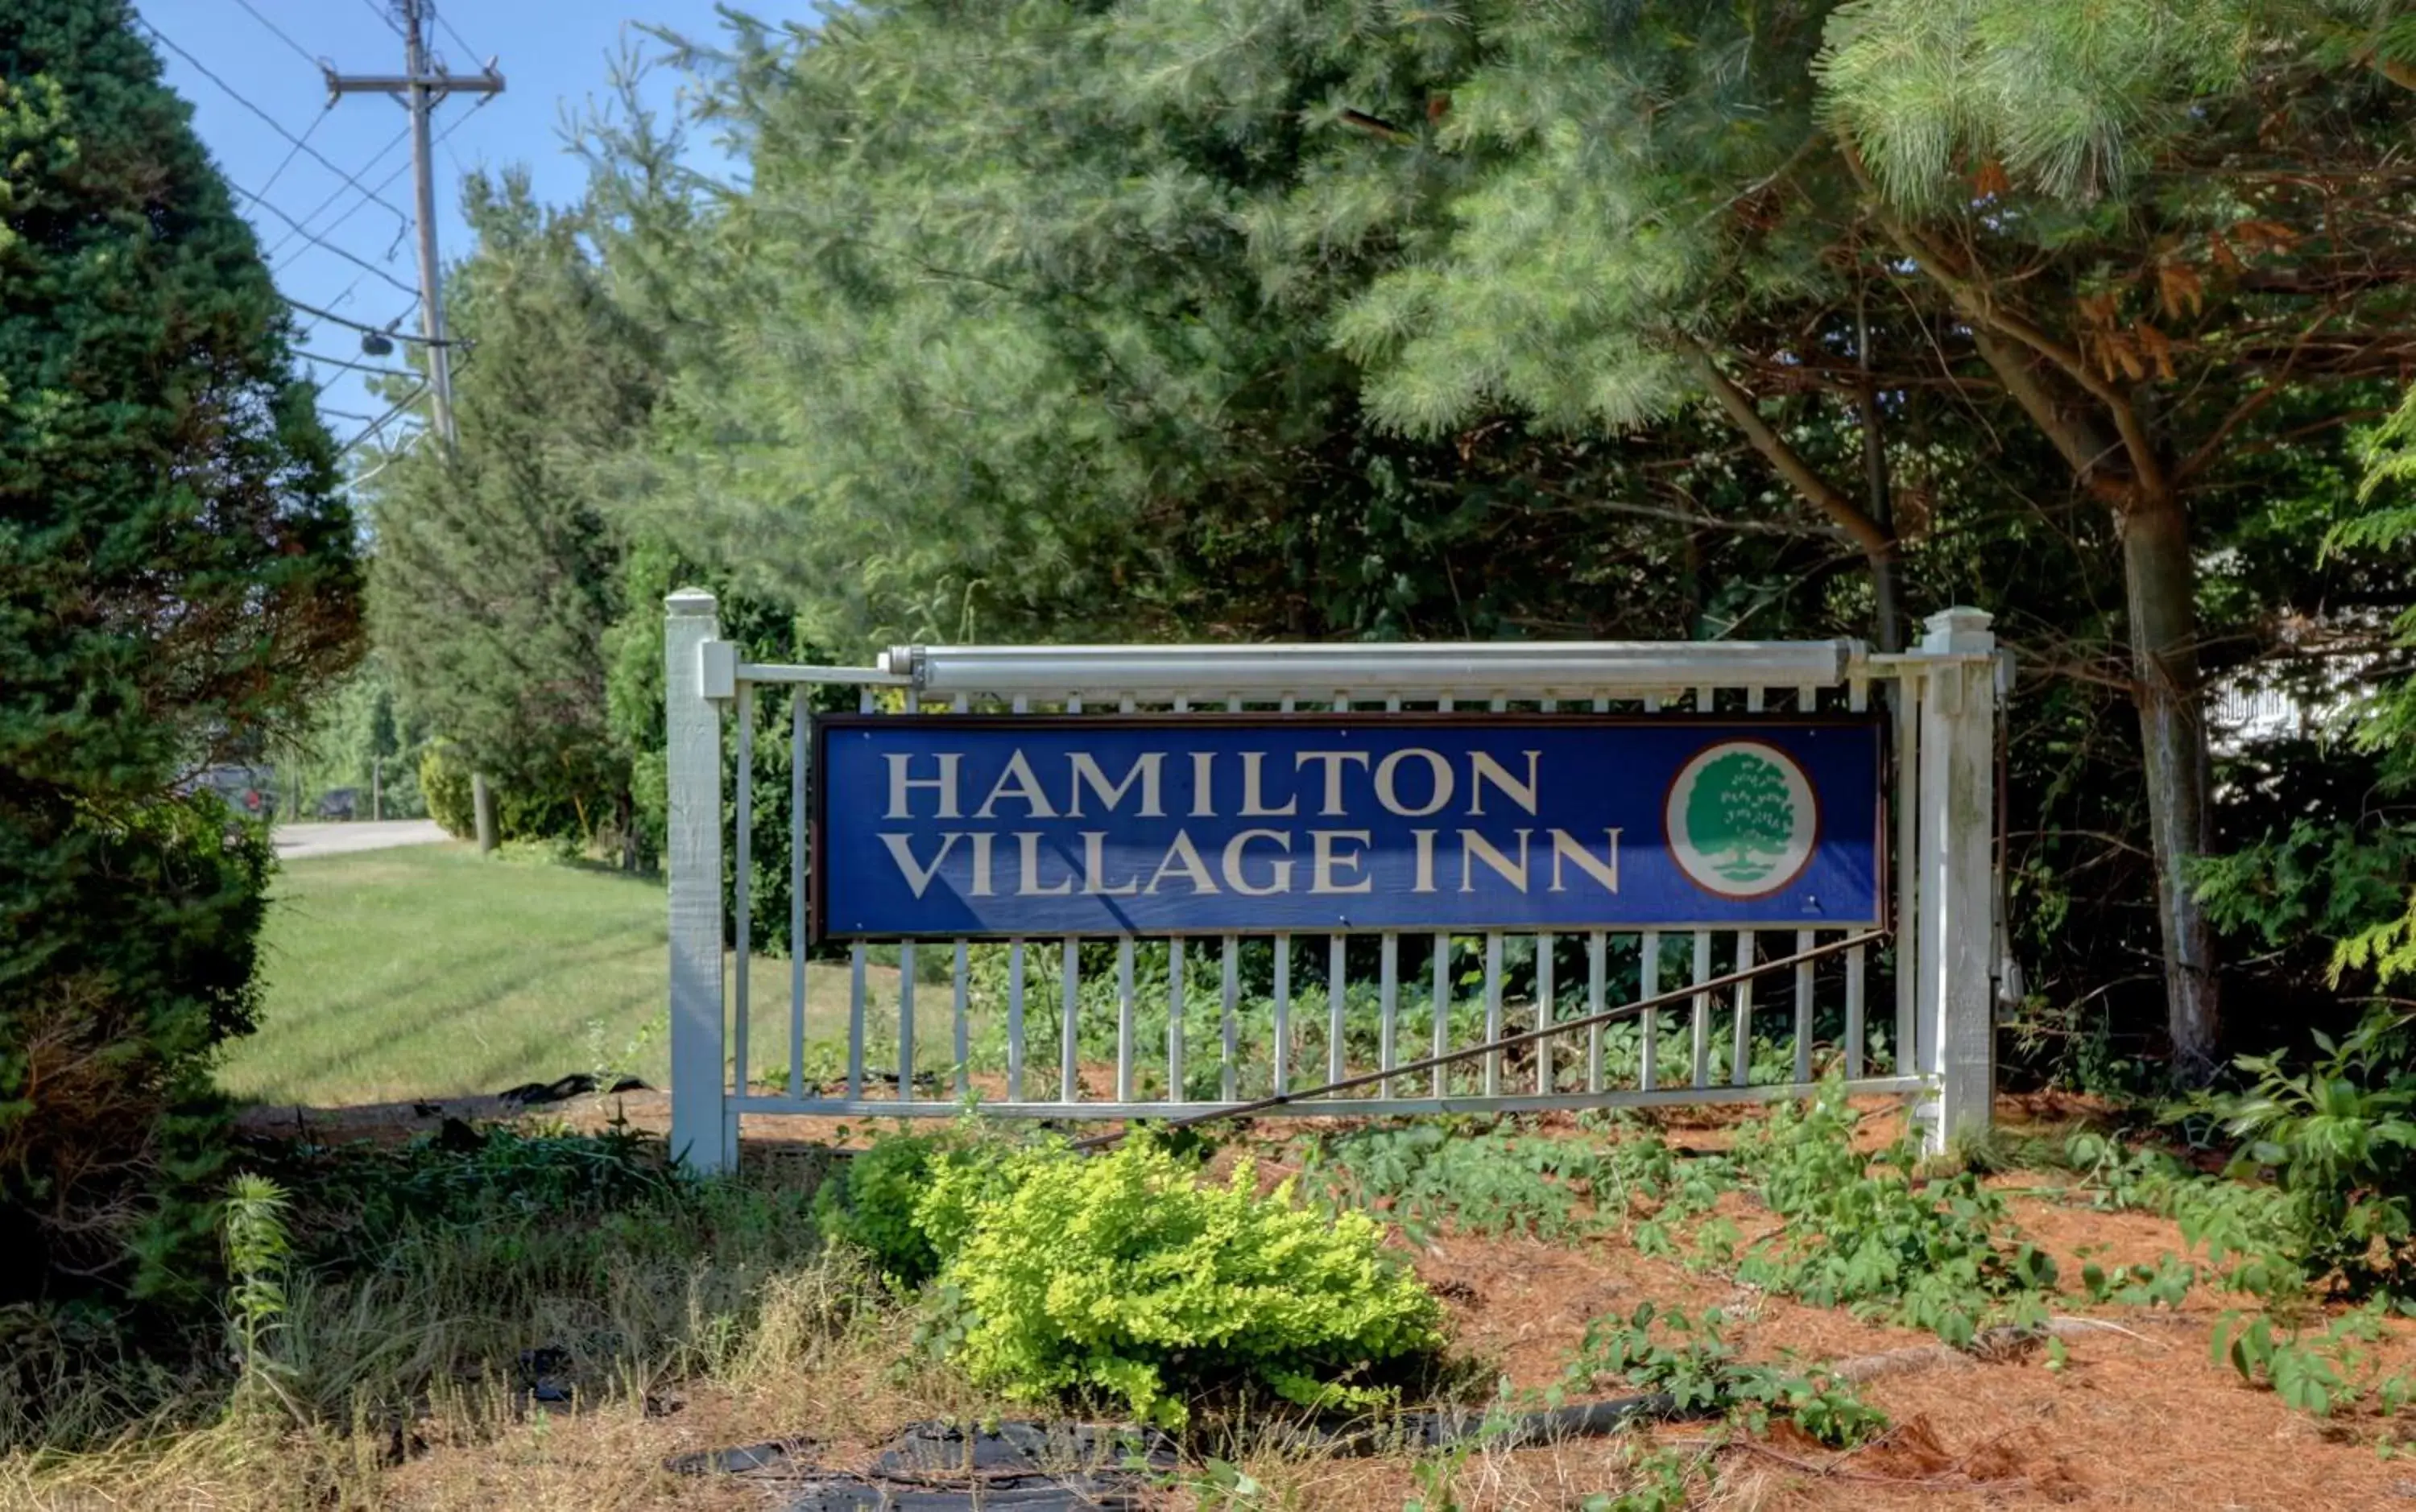 Property logo or sign in Hamilton Village Inn